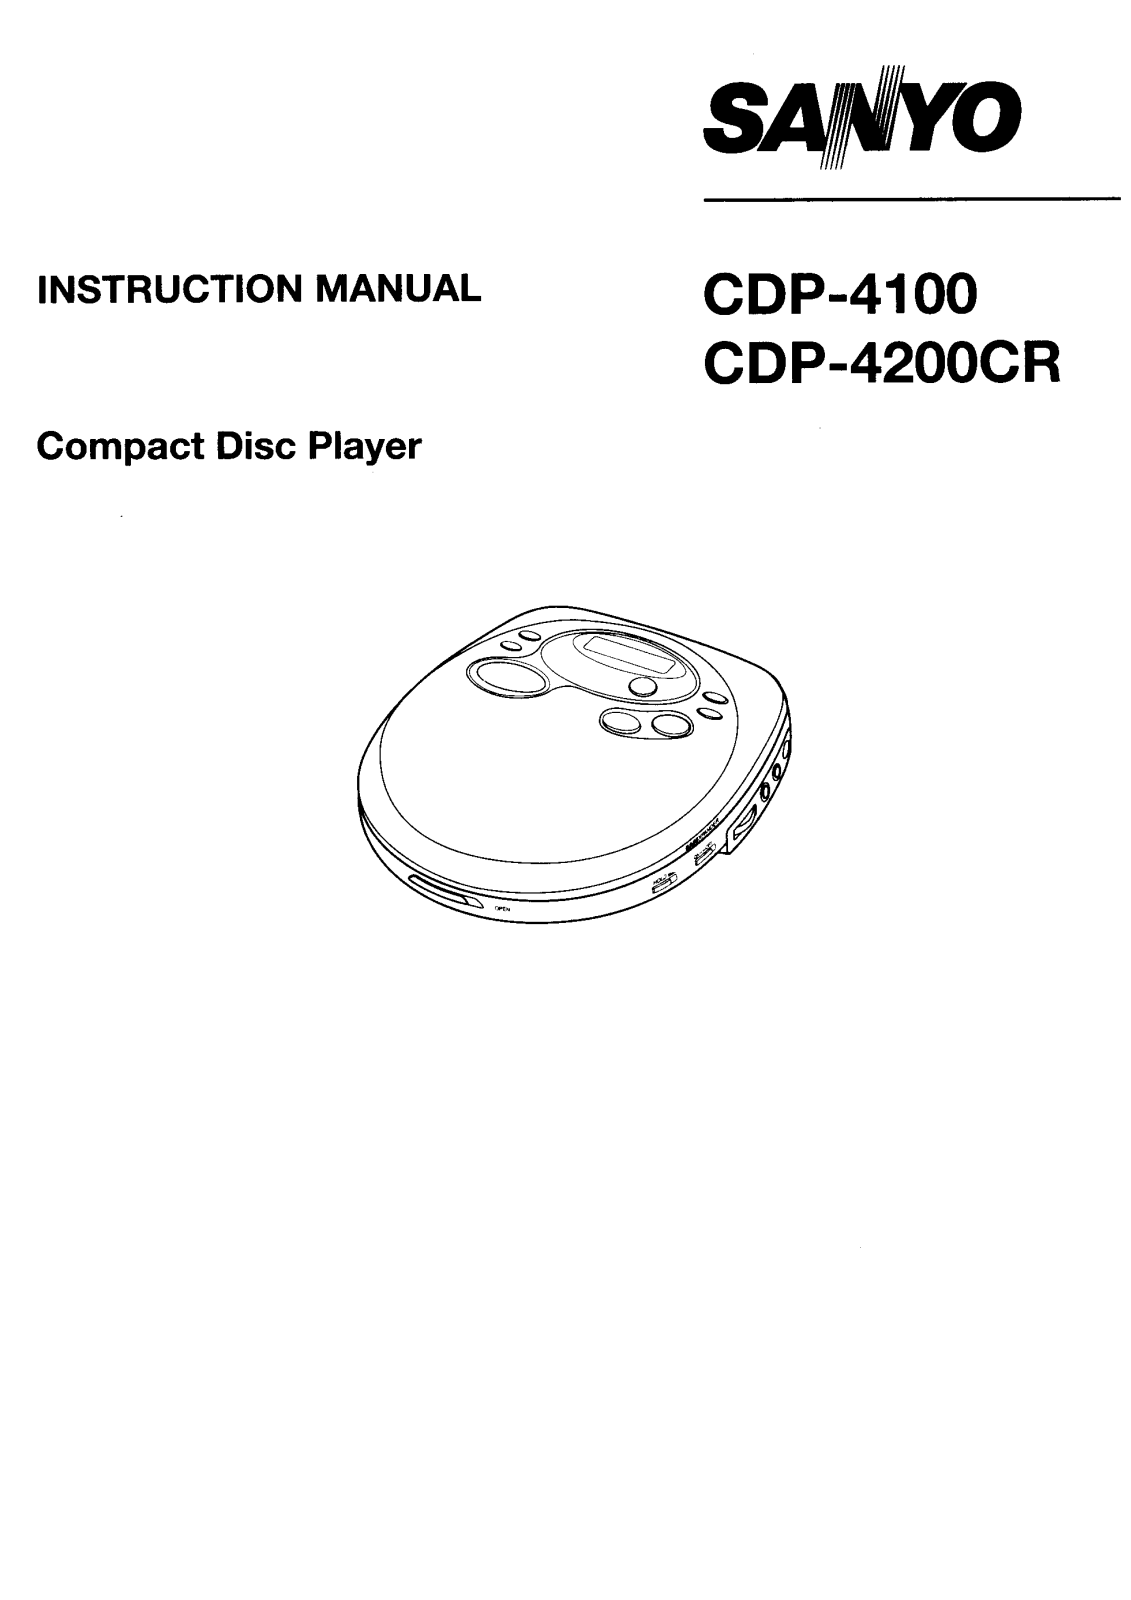 Sanyo CDP-4100, CDP-4200CR Instruction Manual